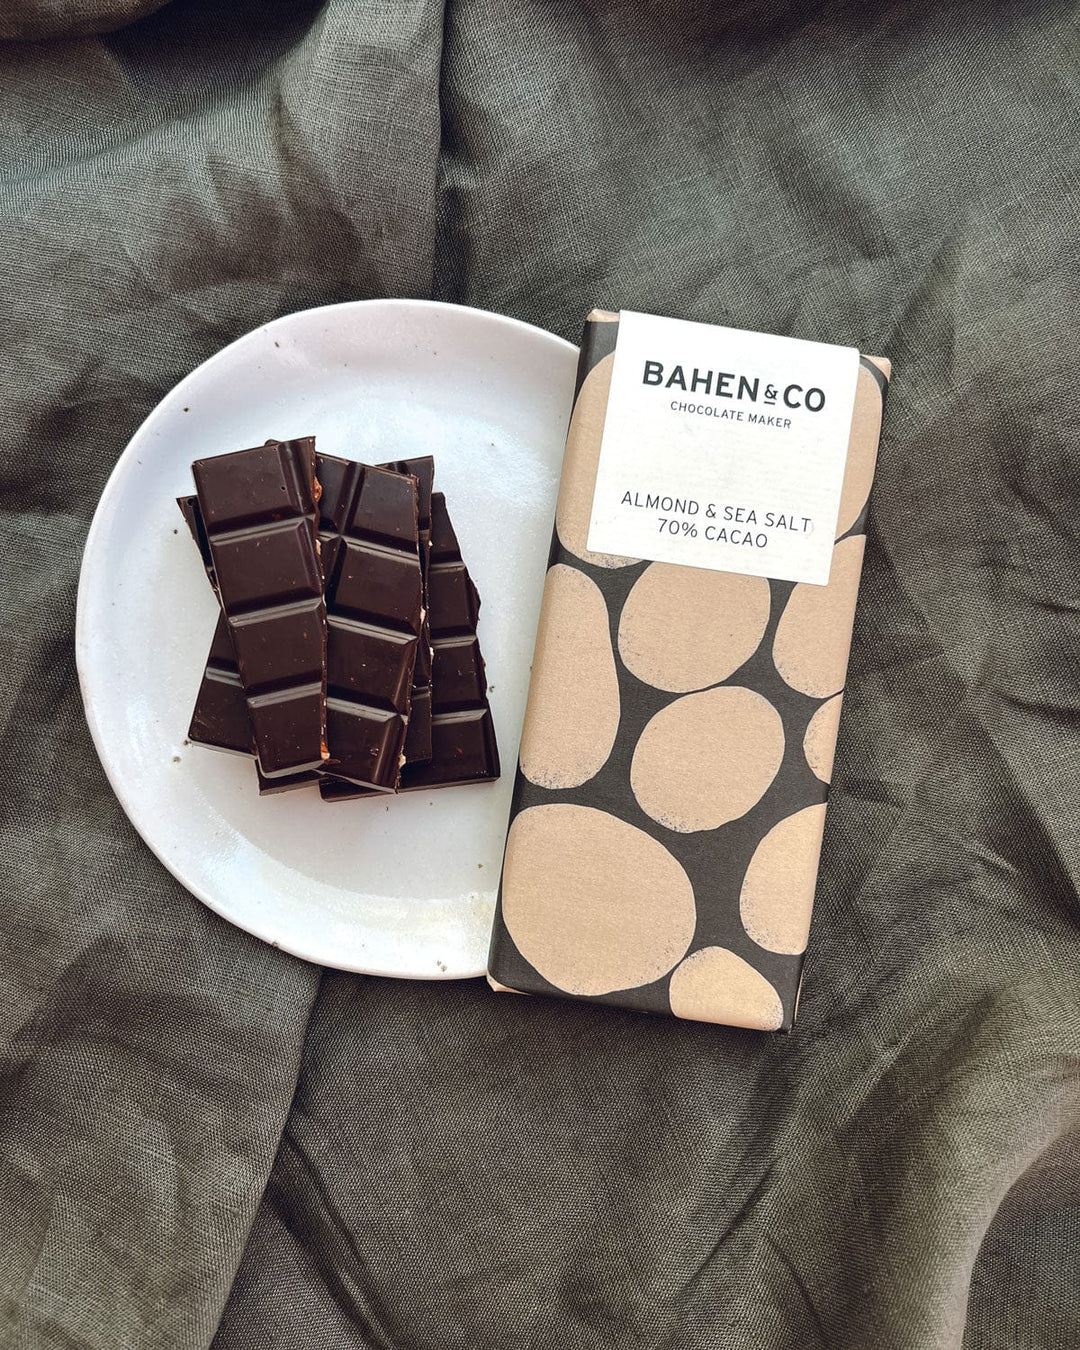 Bahen & Co Chocolate